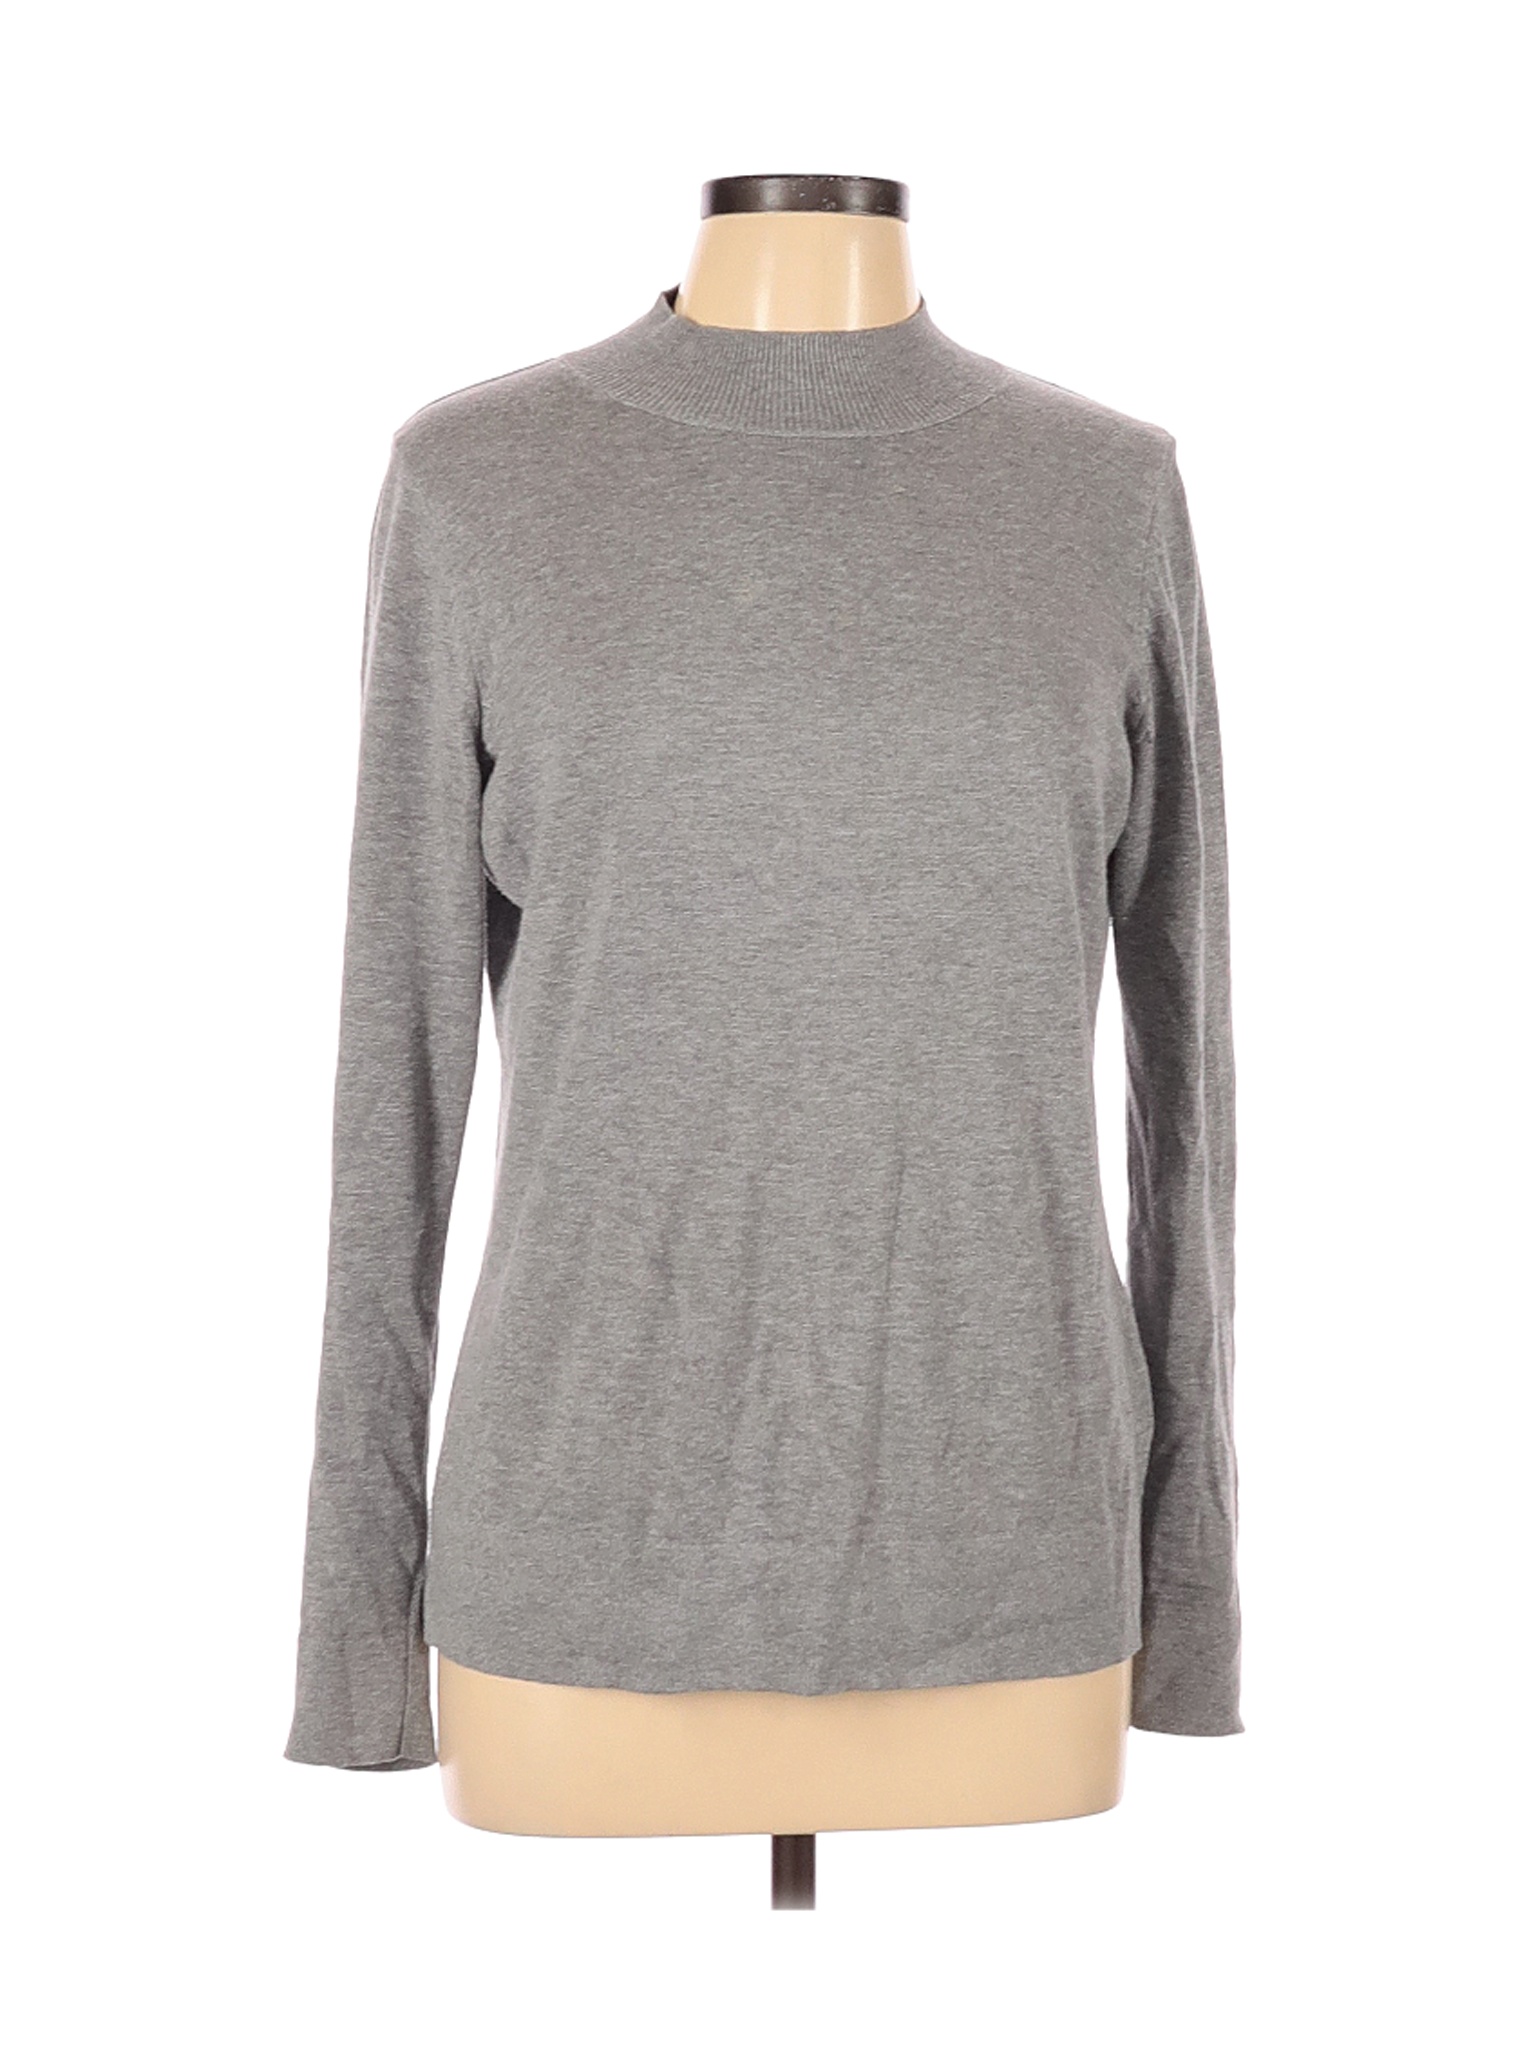 Old Navy Women Gray Pullover Sweater M | eBay